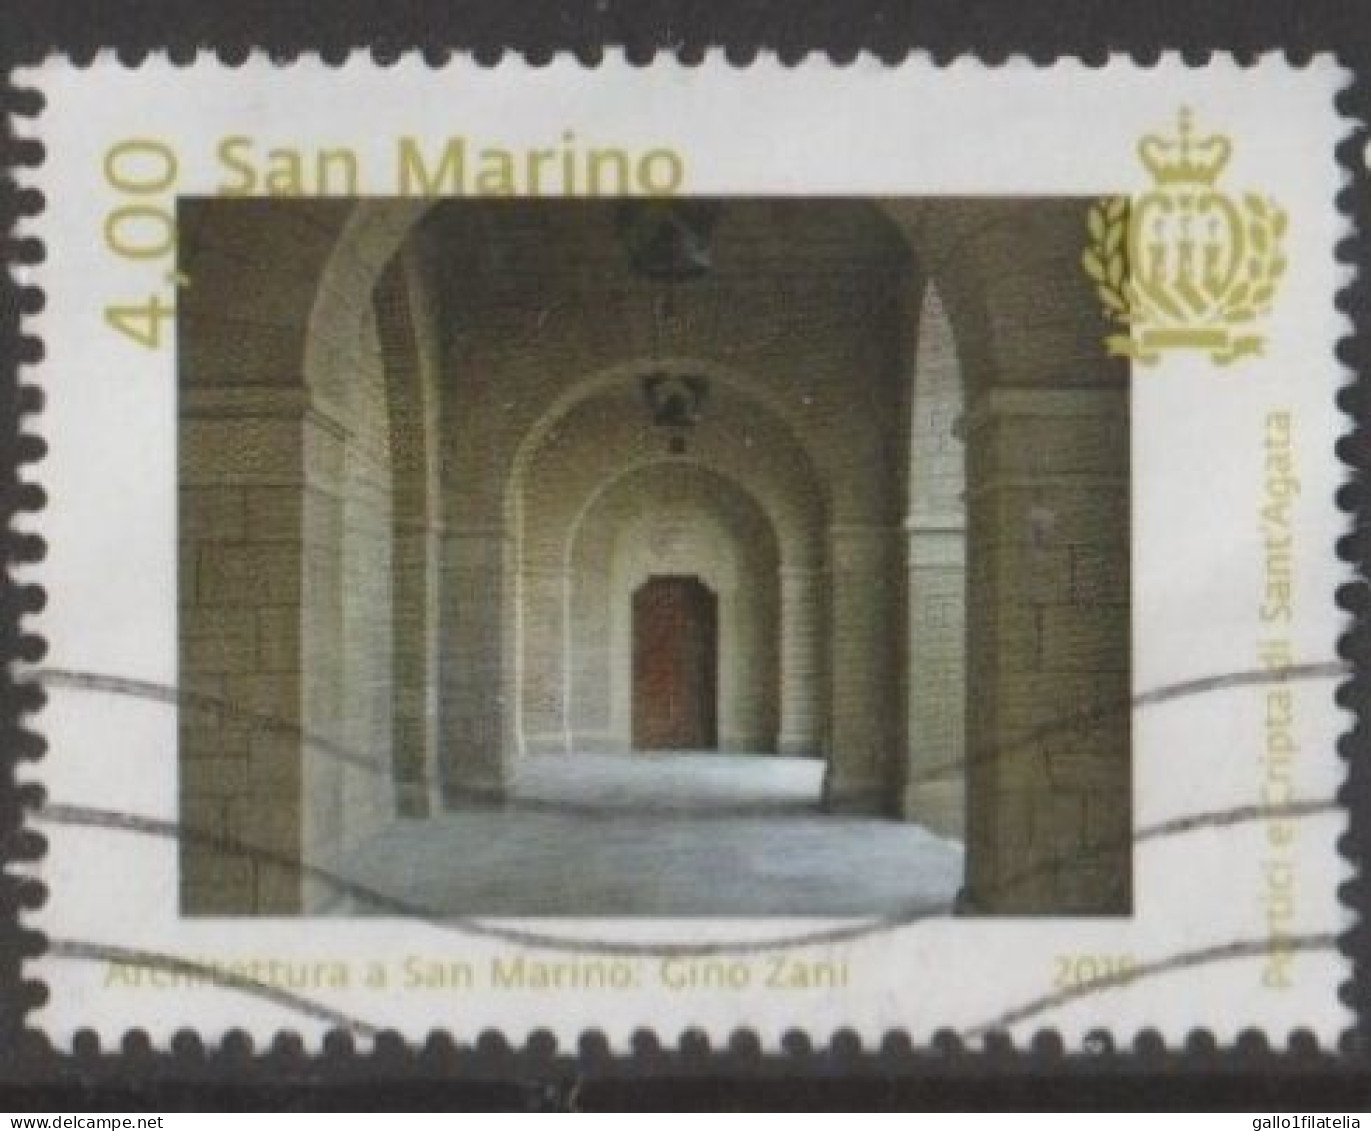 2015 - SAN MARINO - ARCHITETTURA A SAN MARINO / ARCHITECTURE IN SAN MARINO - USATO. - Used Stamps